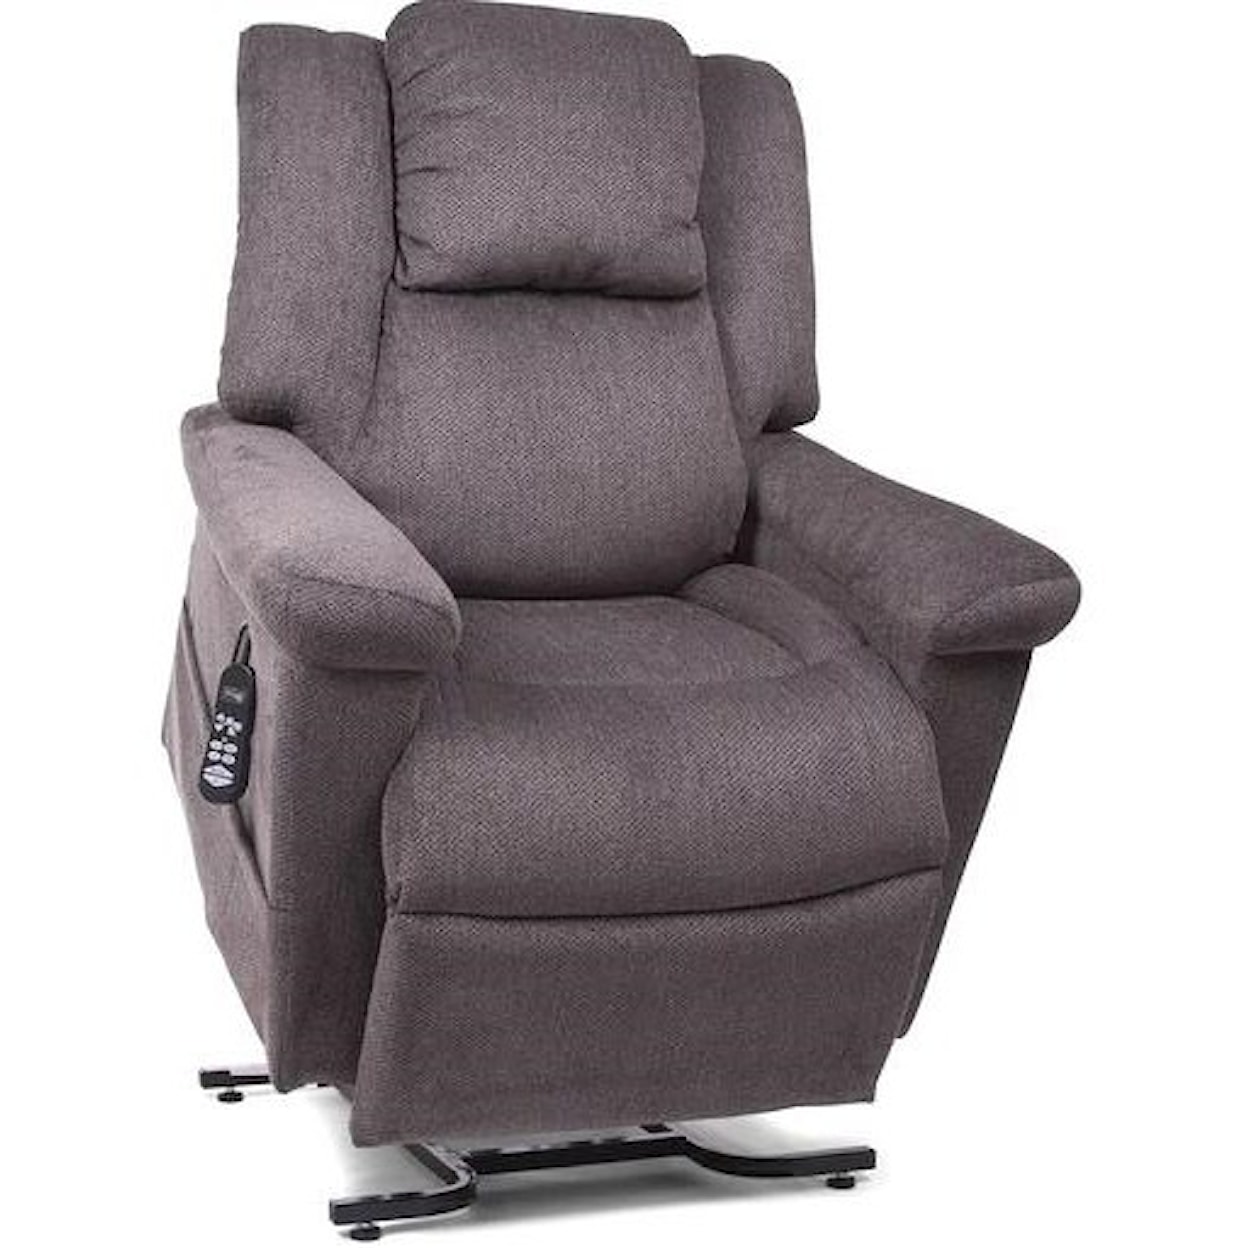 UltraComfort Texann Texann Lift Chair